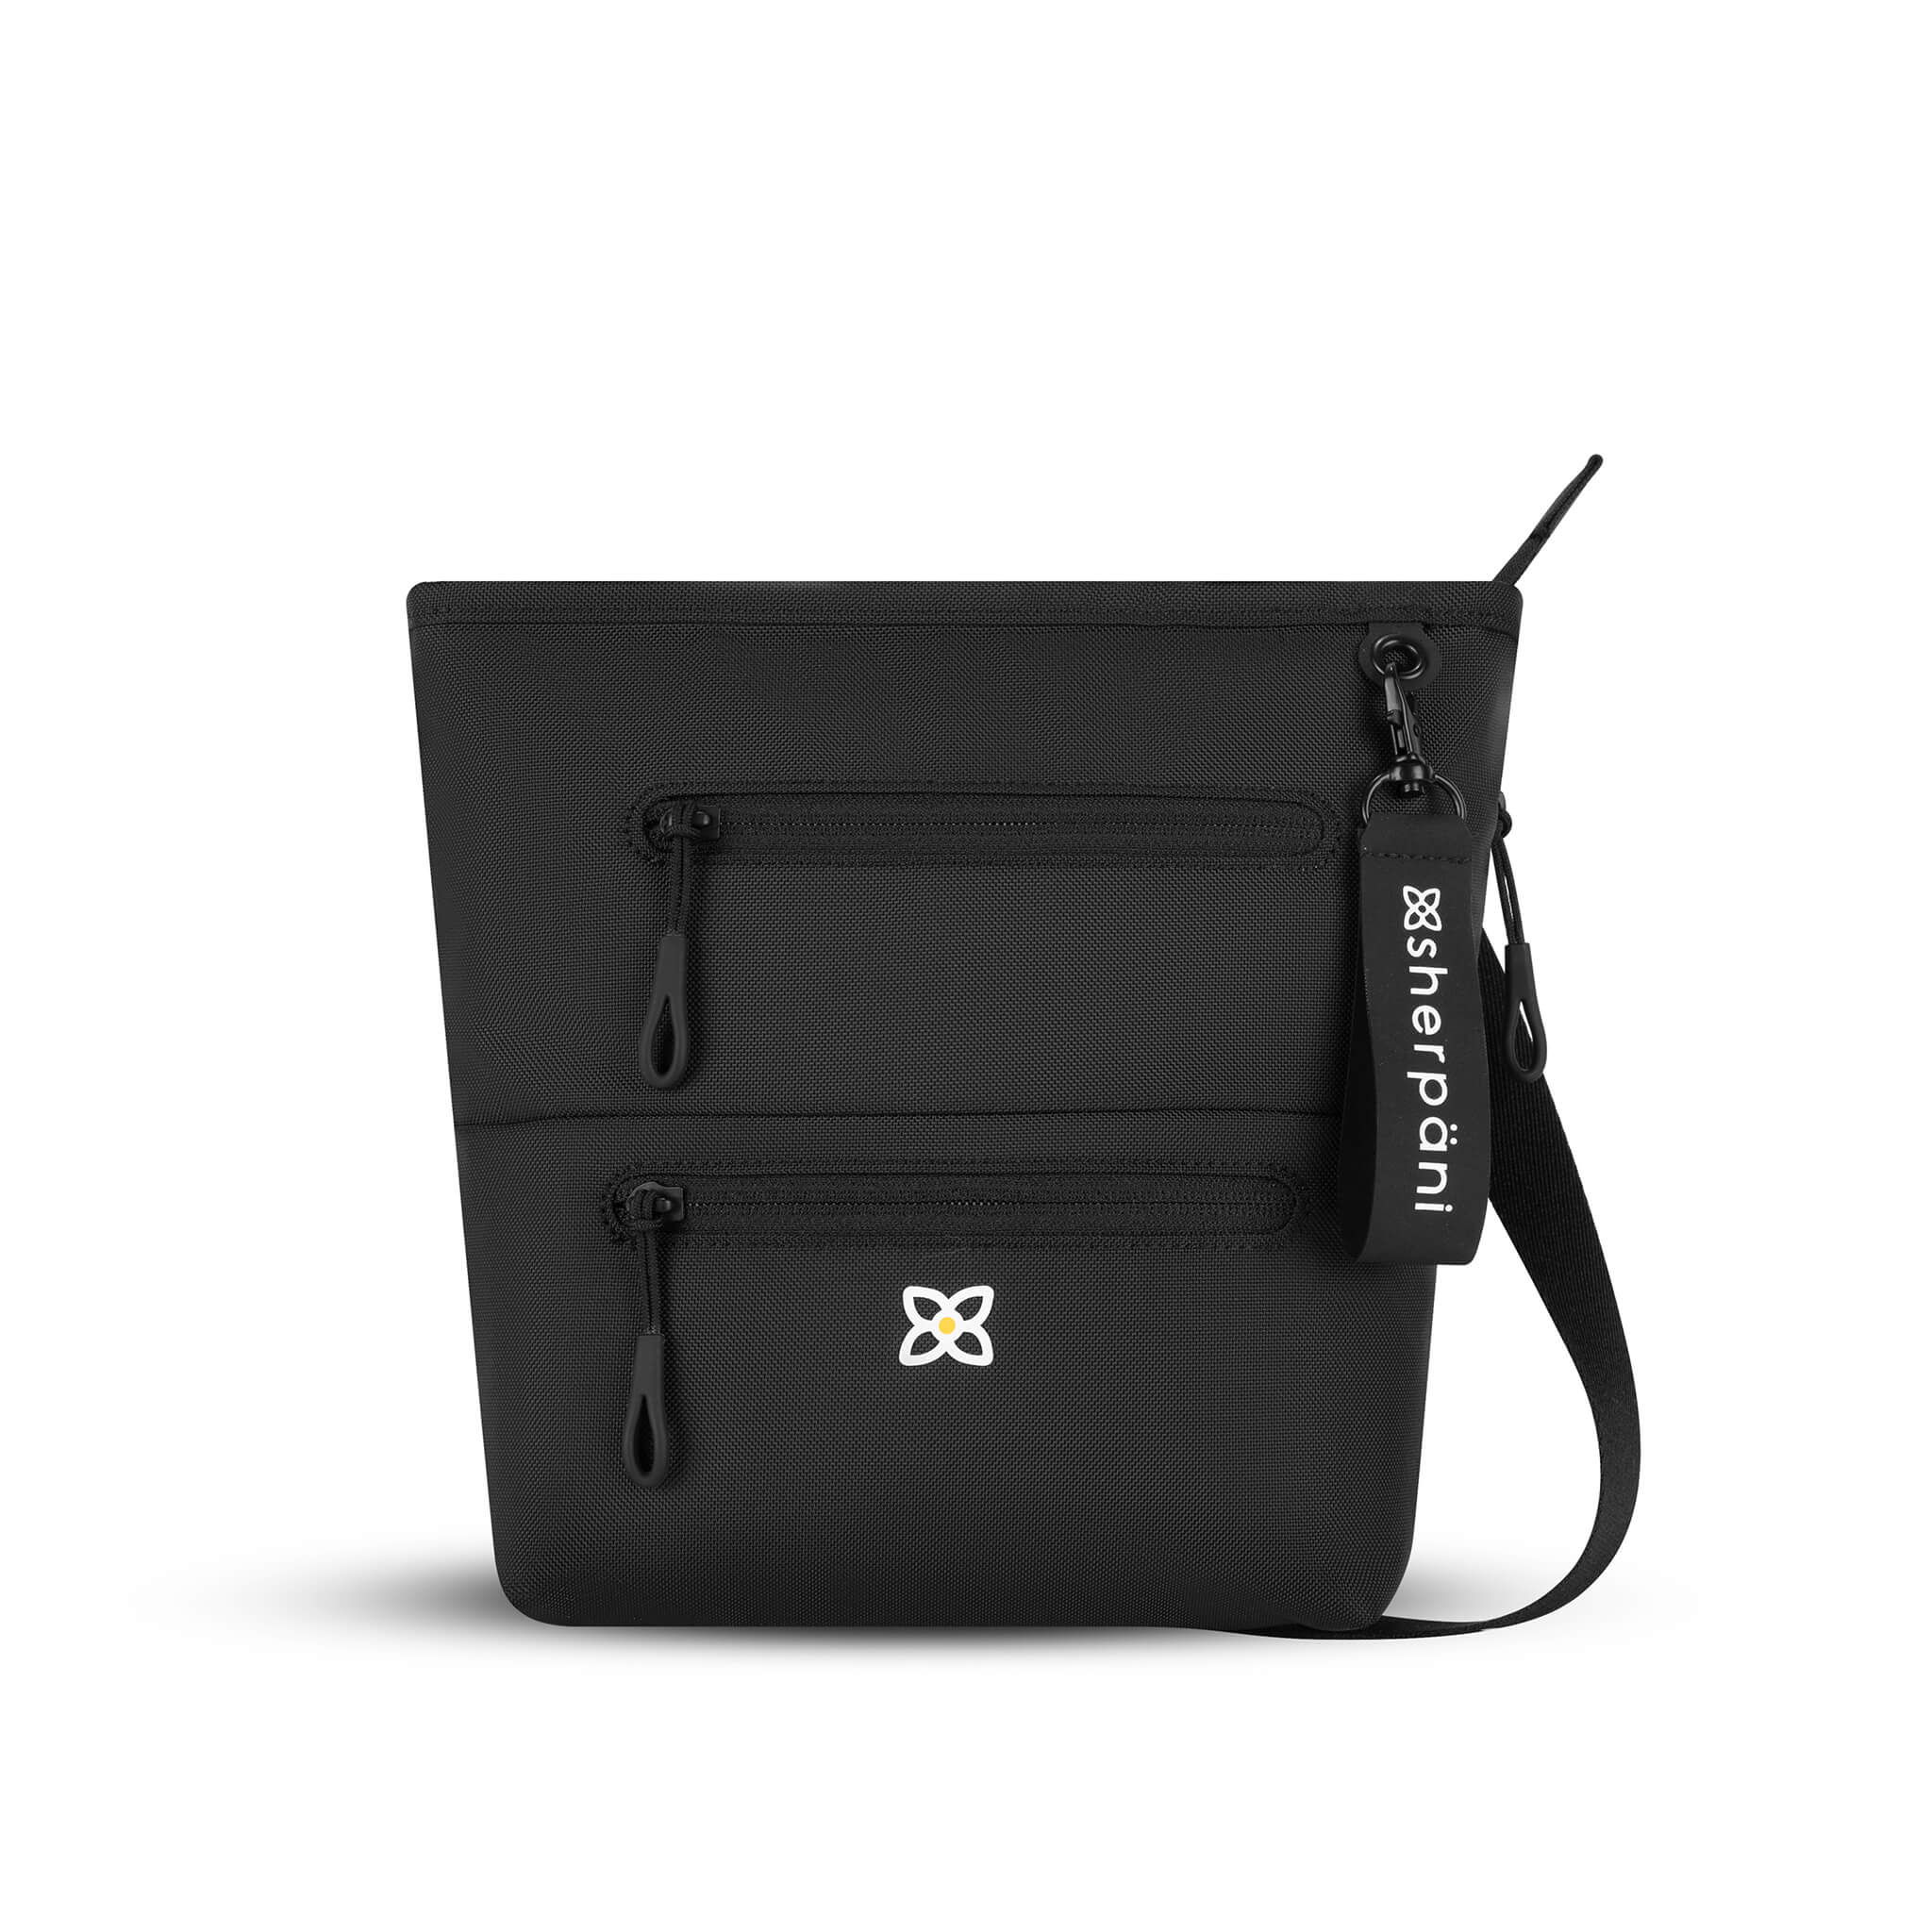 CALVIN KLEIN Women's Brown Logo Leather Double Flat Strap Tote Handbag Purse